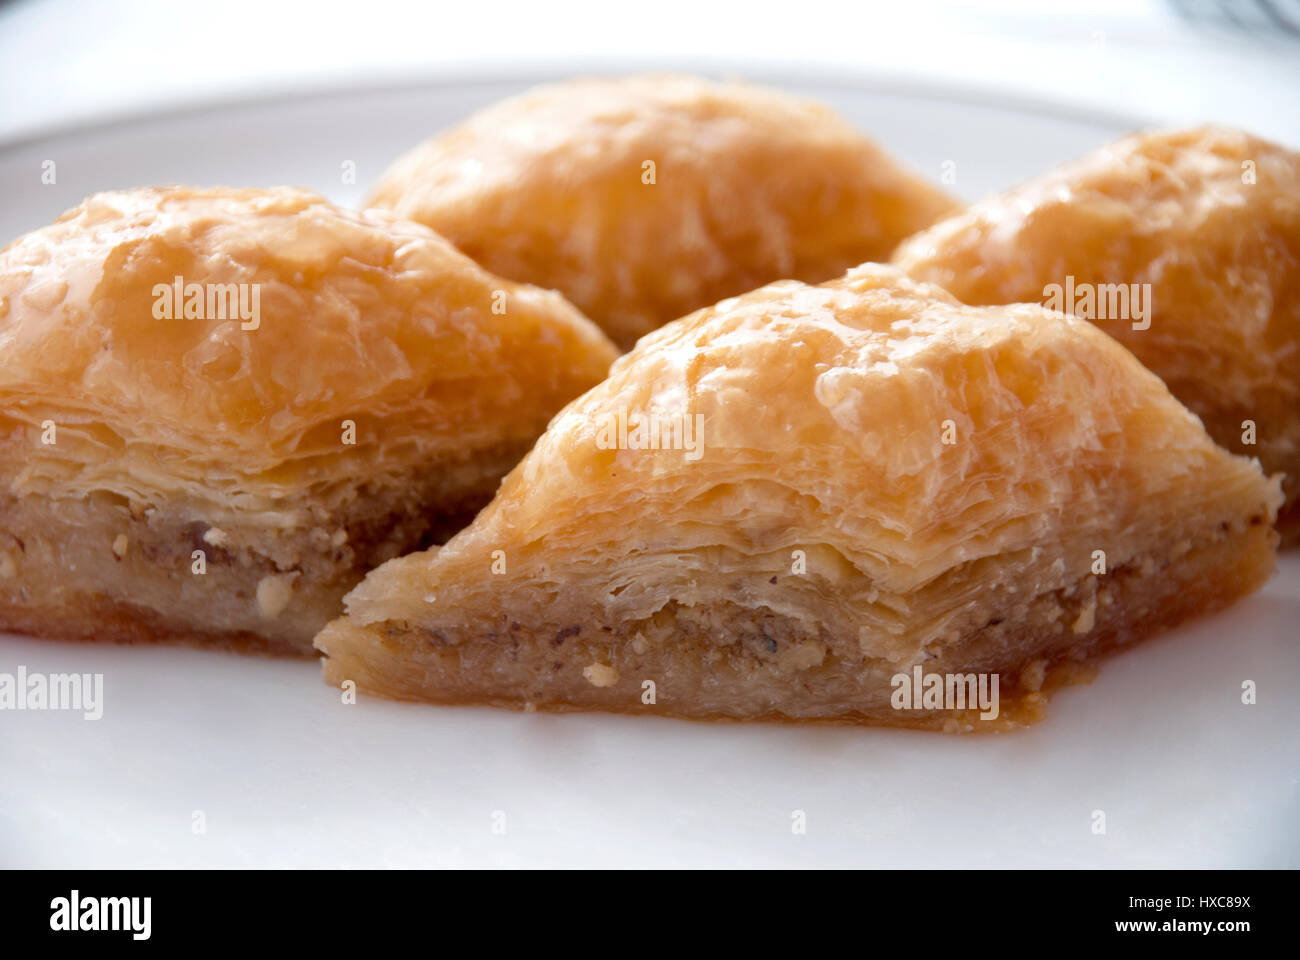 Delicious Turkish Sweet: Baklava with walnuts Stock Photo